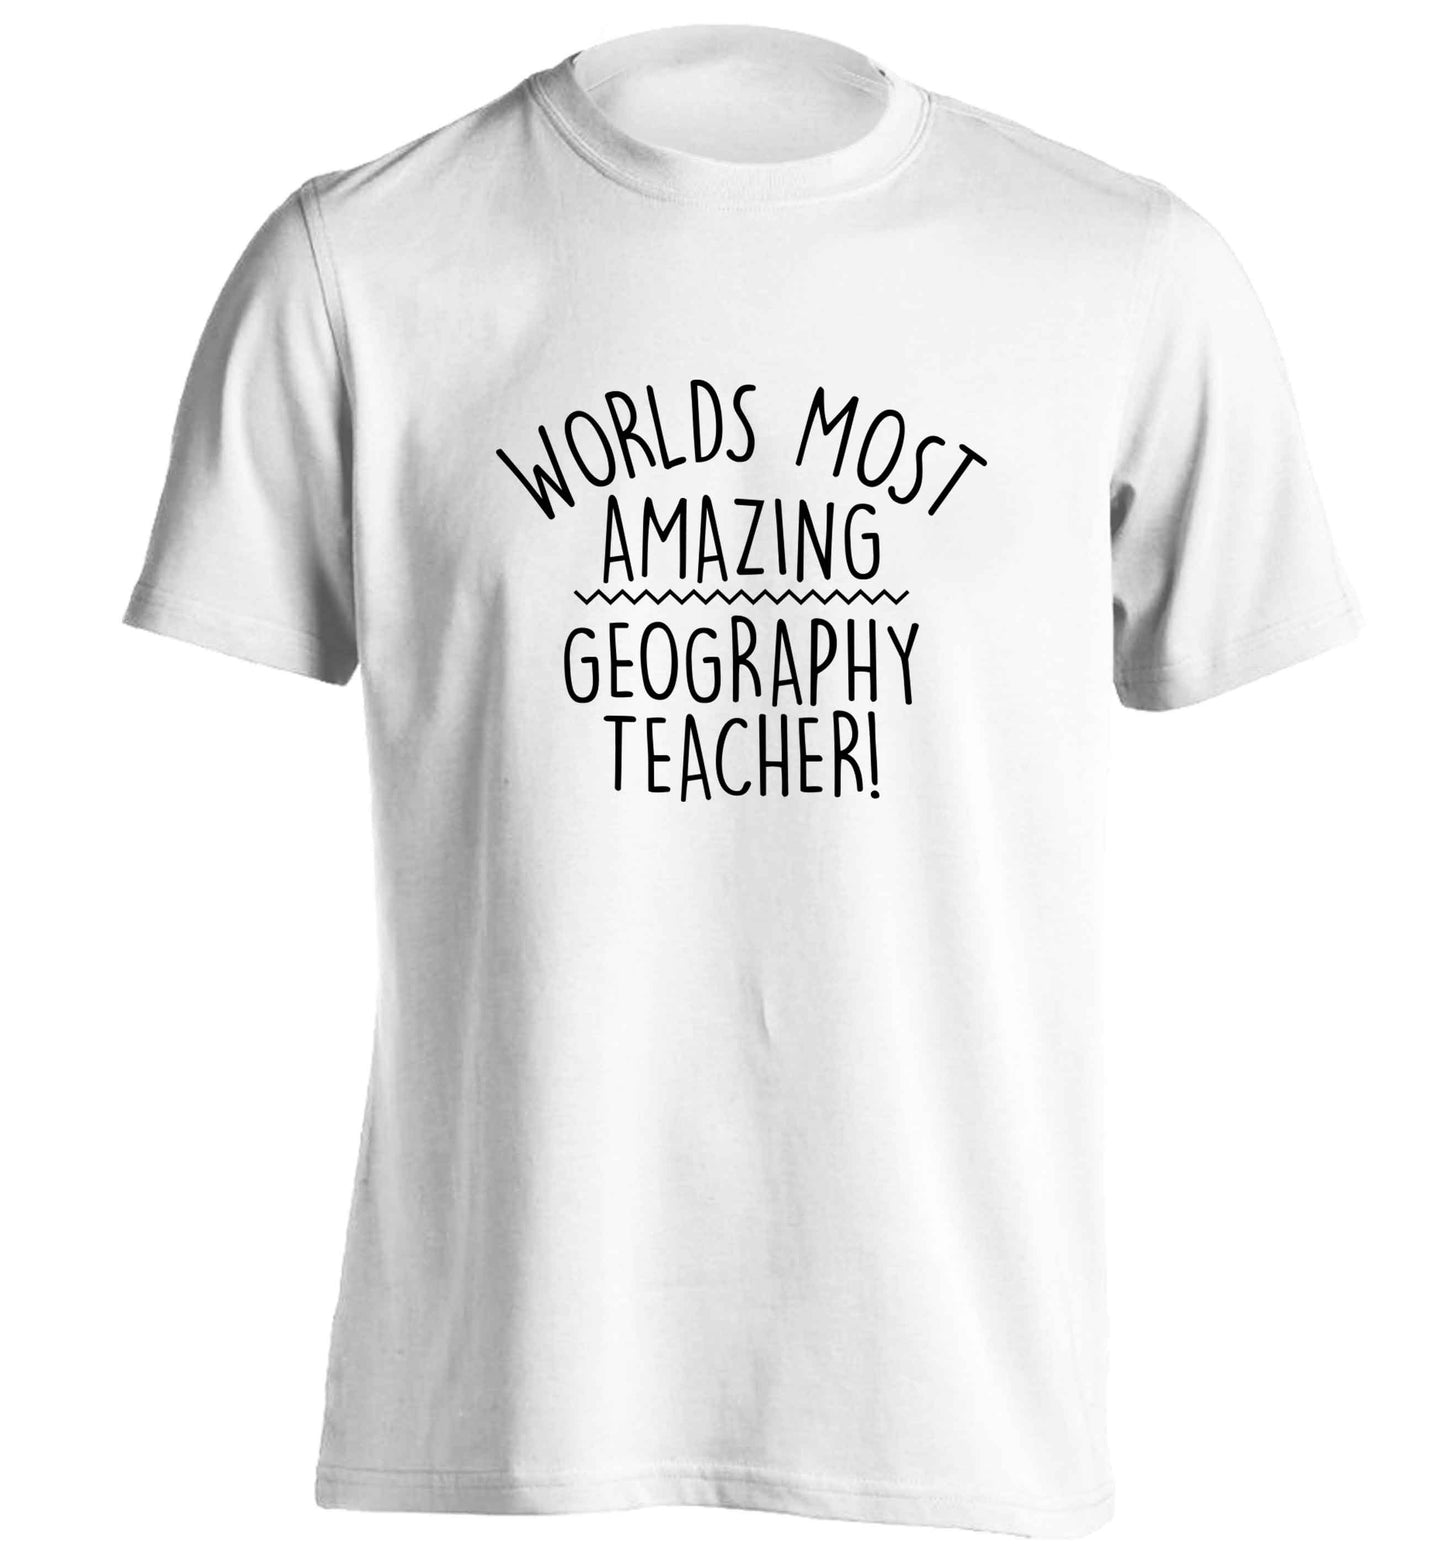 Worlds most amazing geography teacher adults unisex white Tshirt 2XL